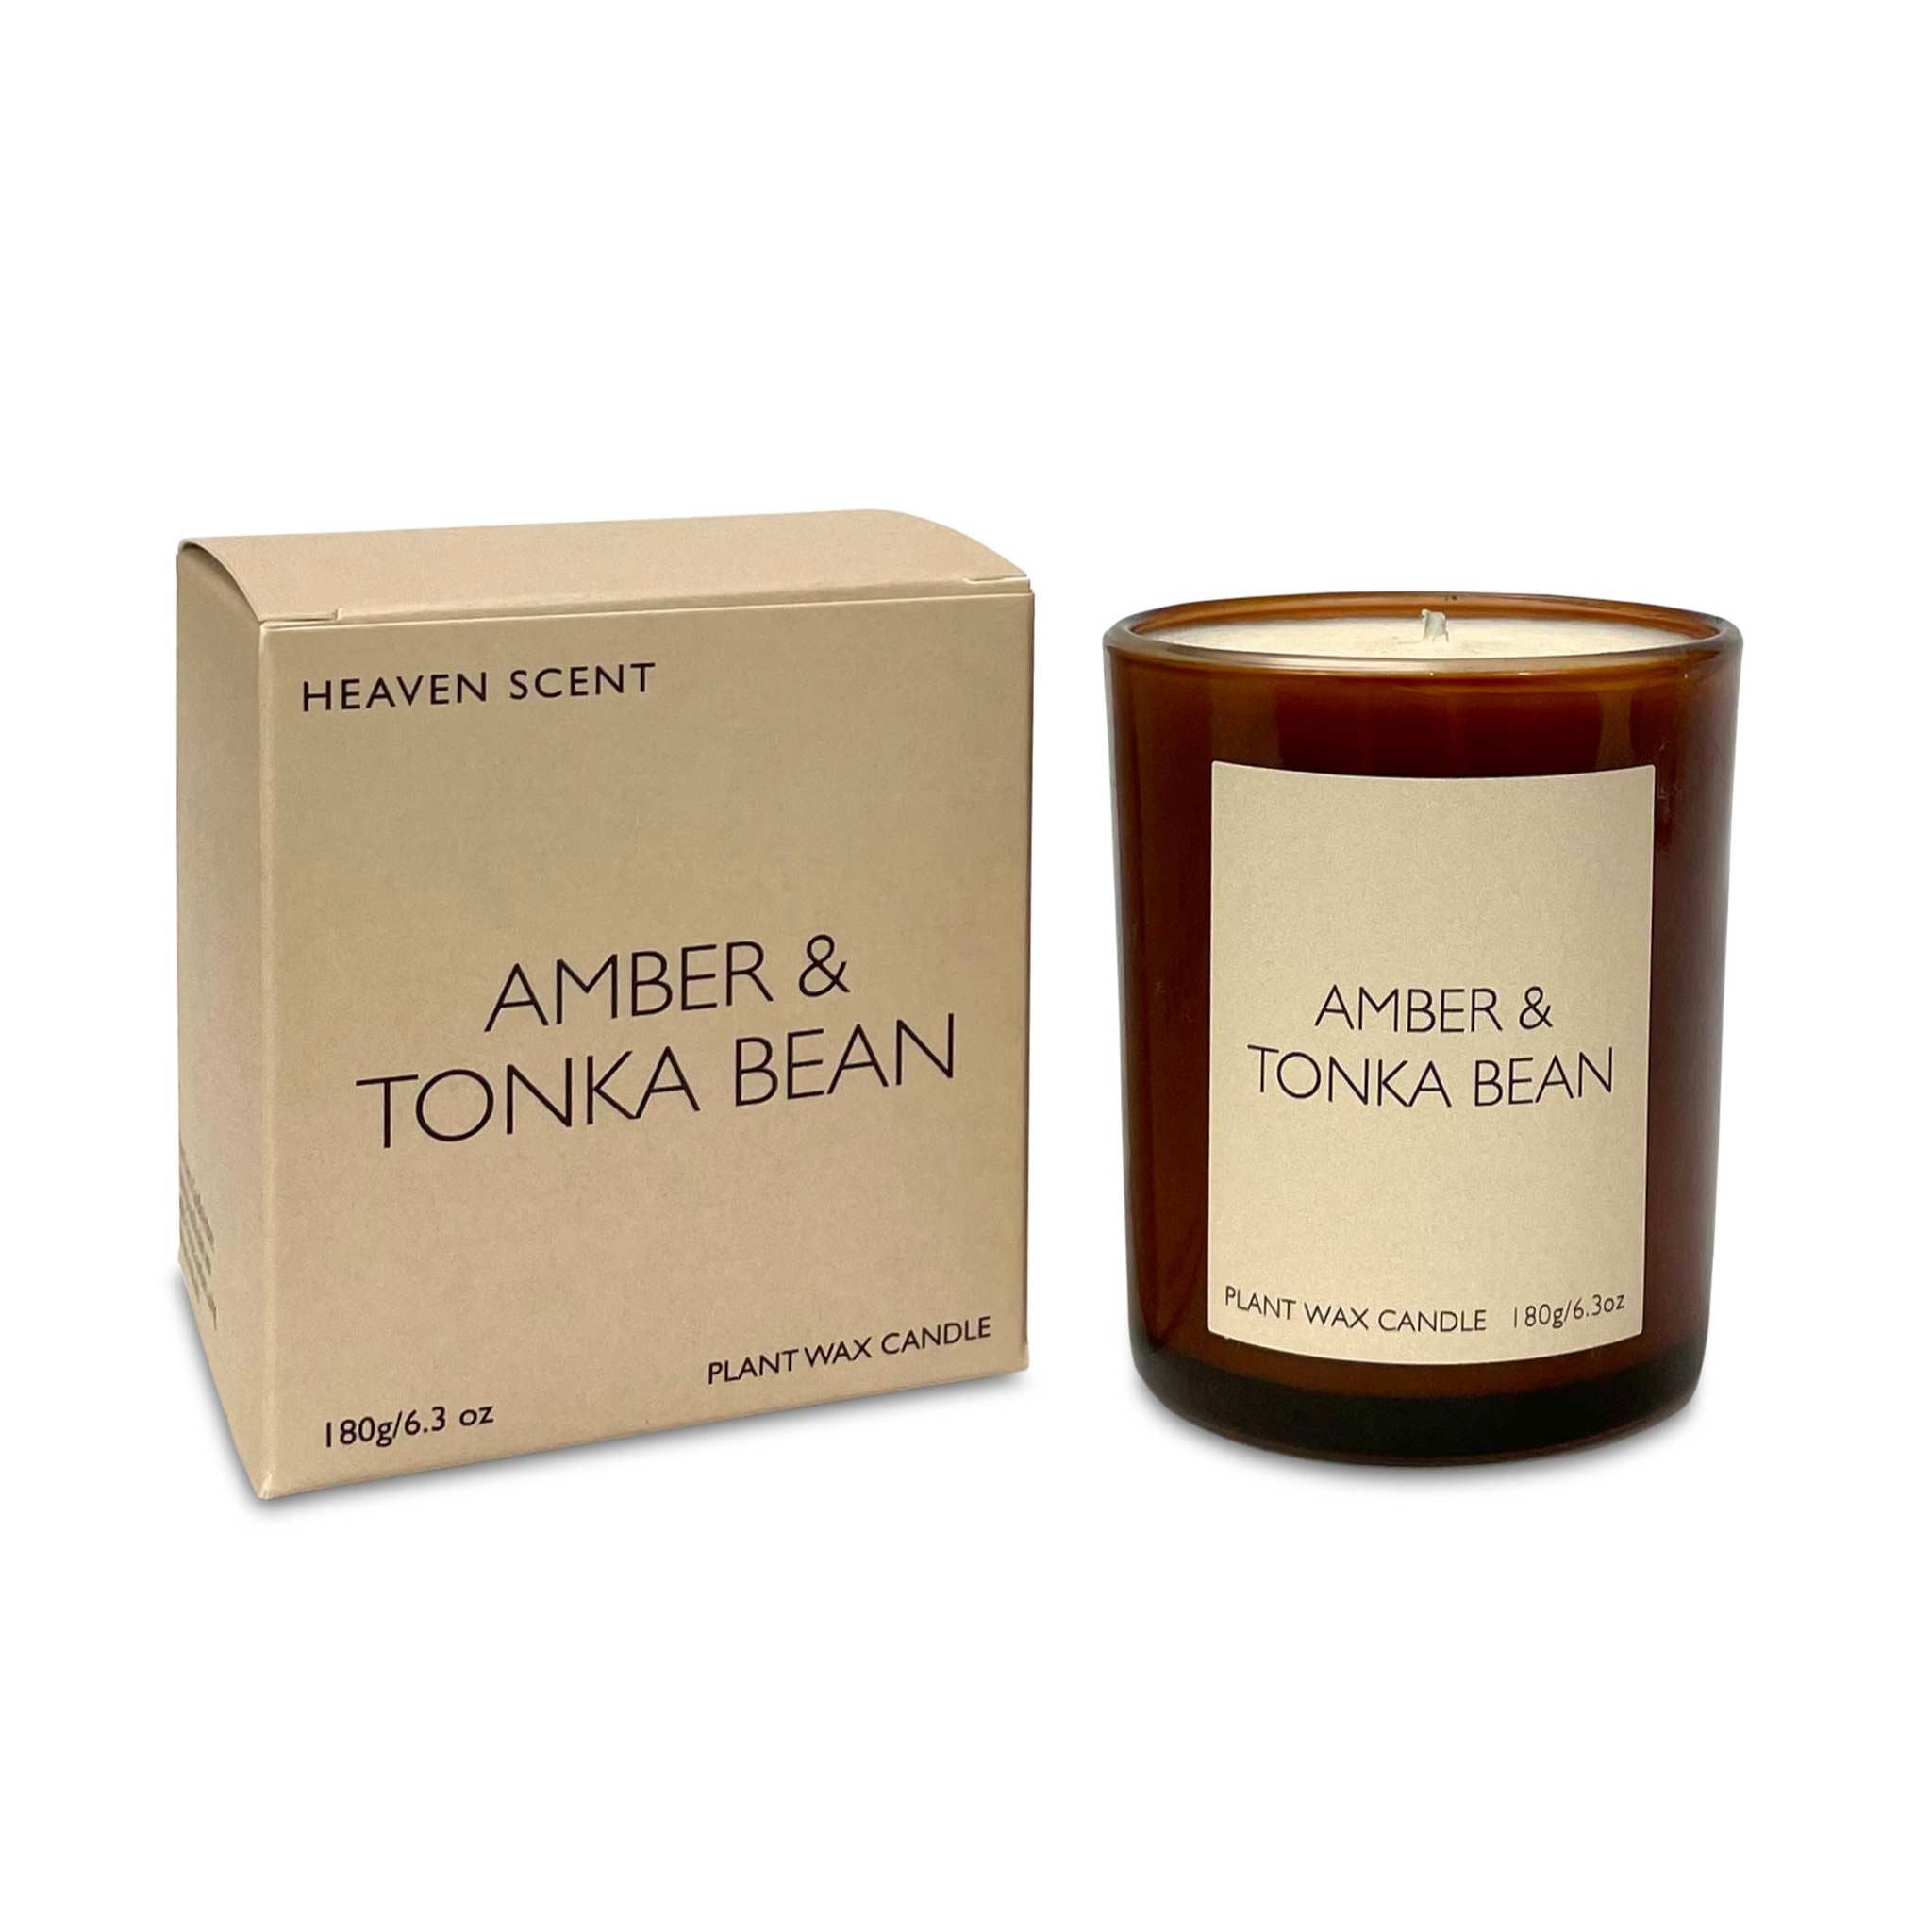 Amber and Tonka Bean Plant wax candle